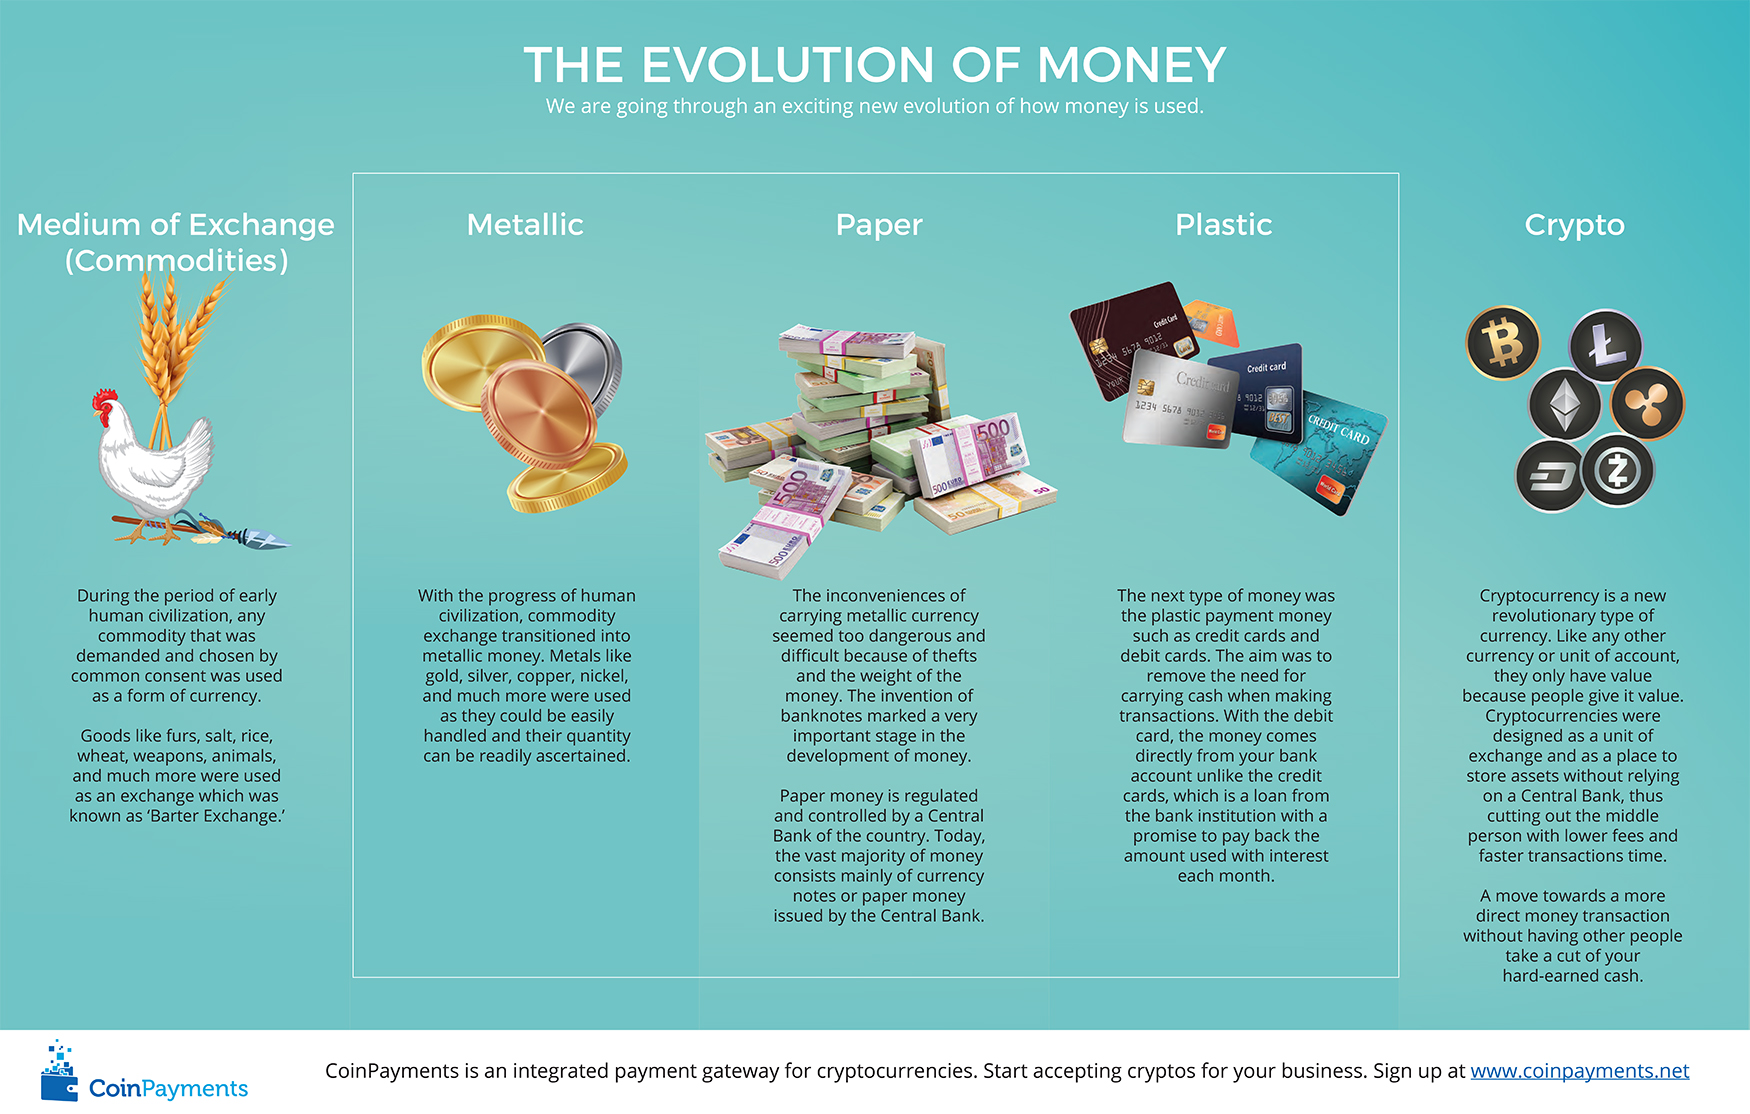 evolution of money essay